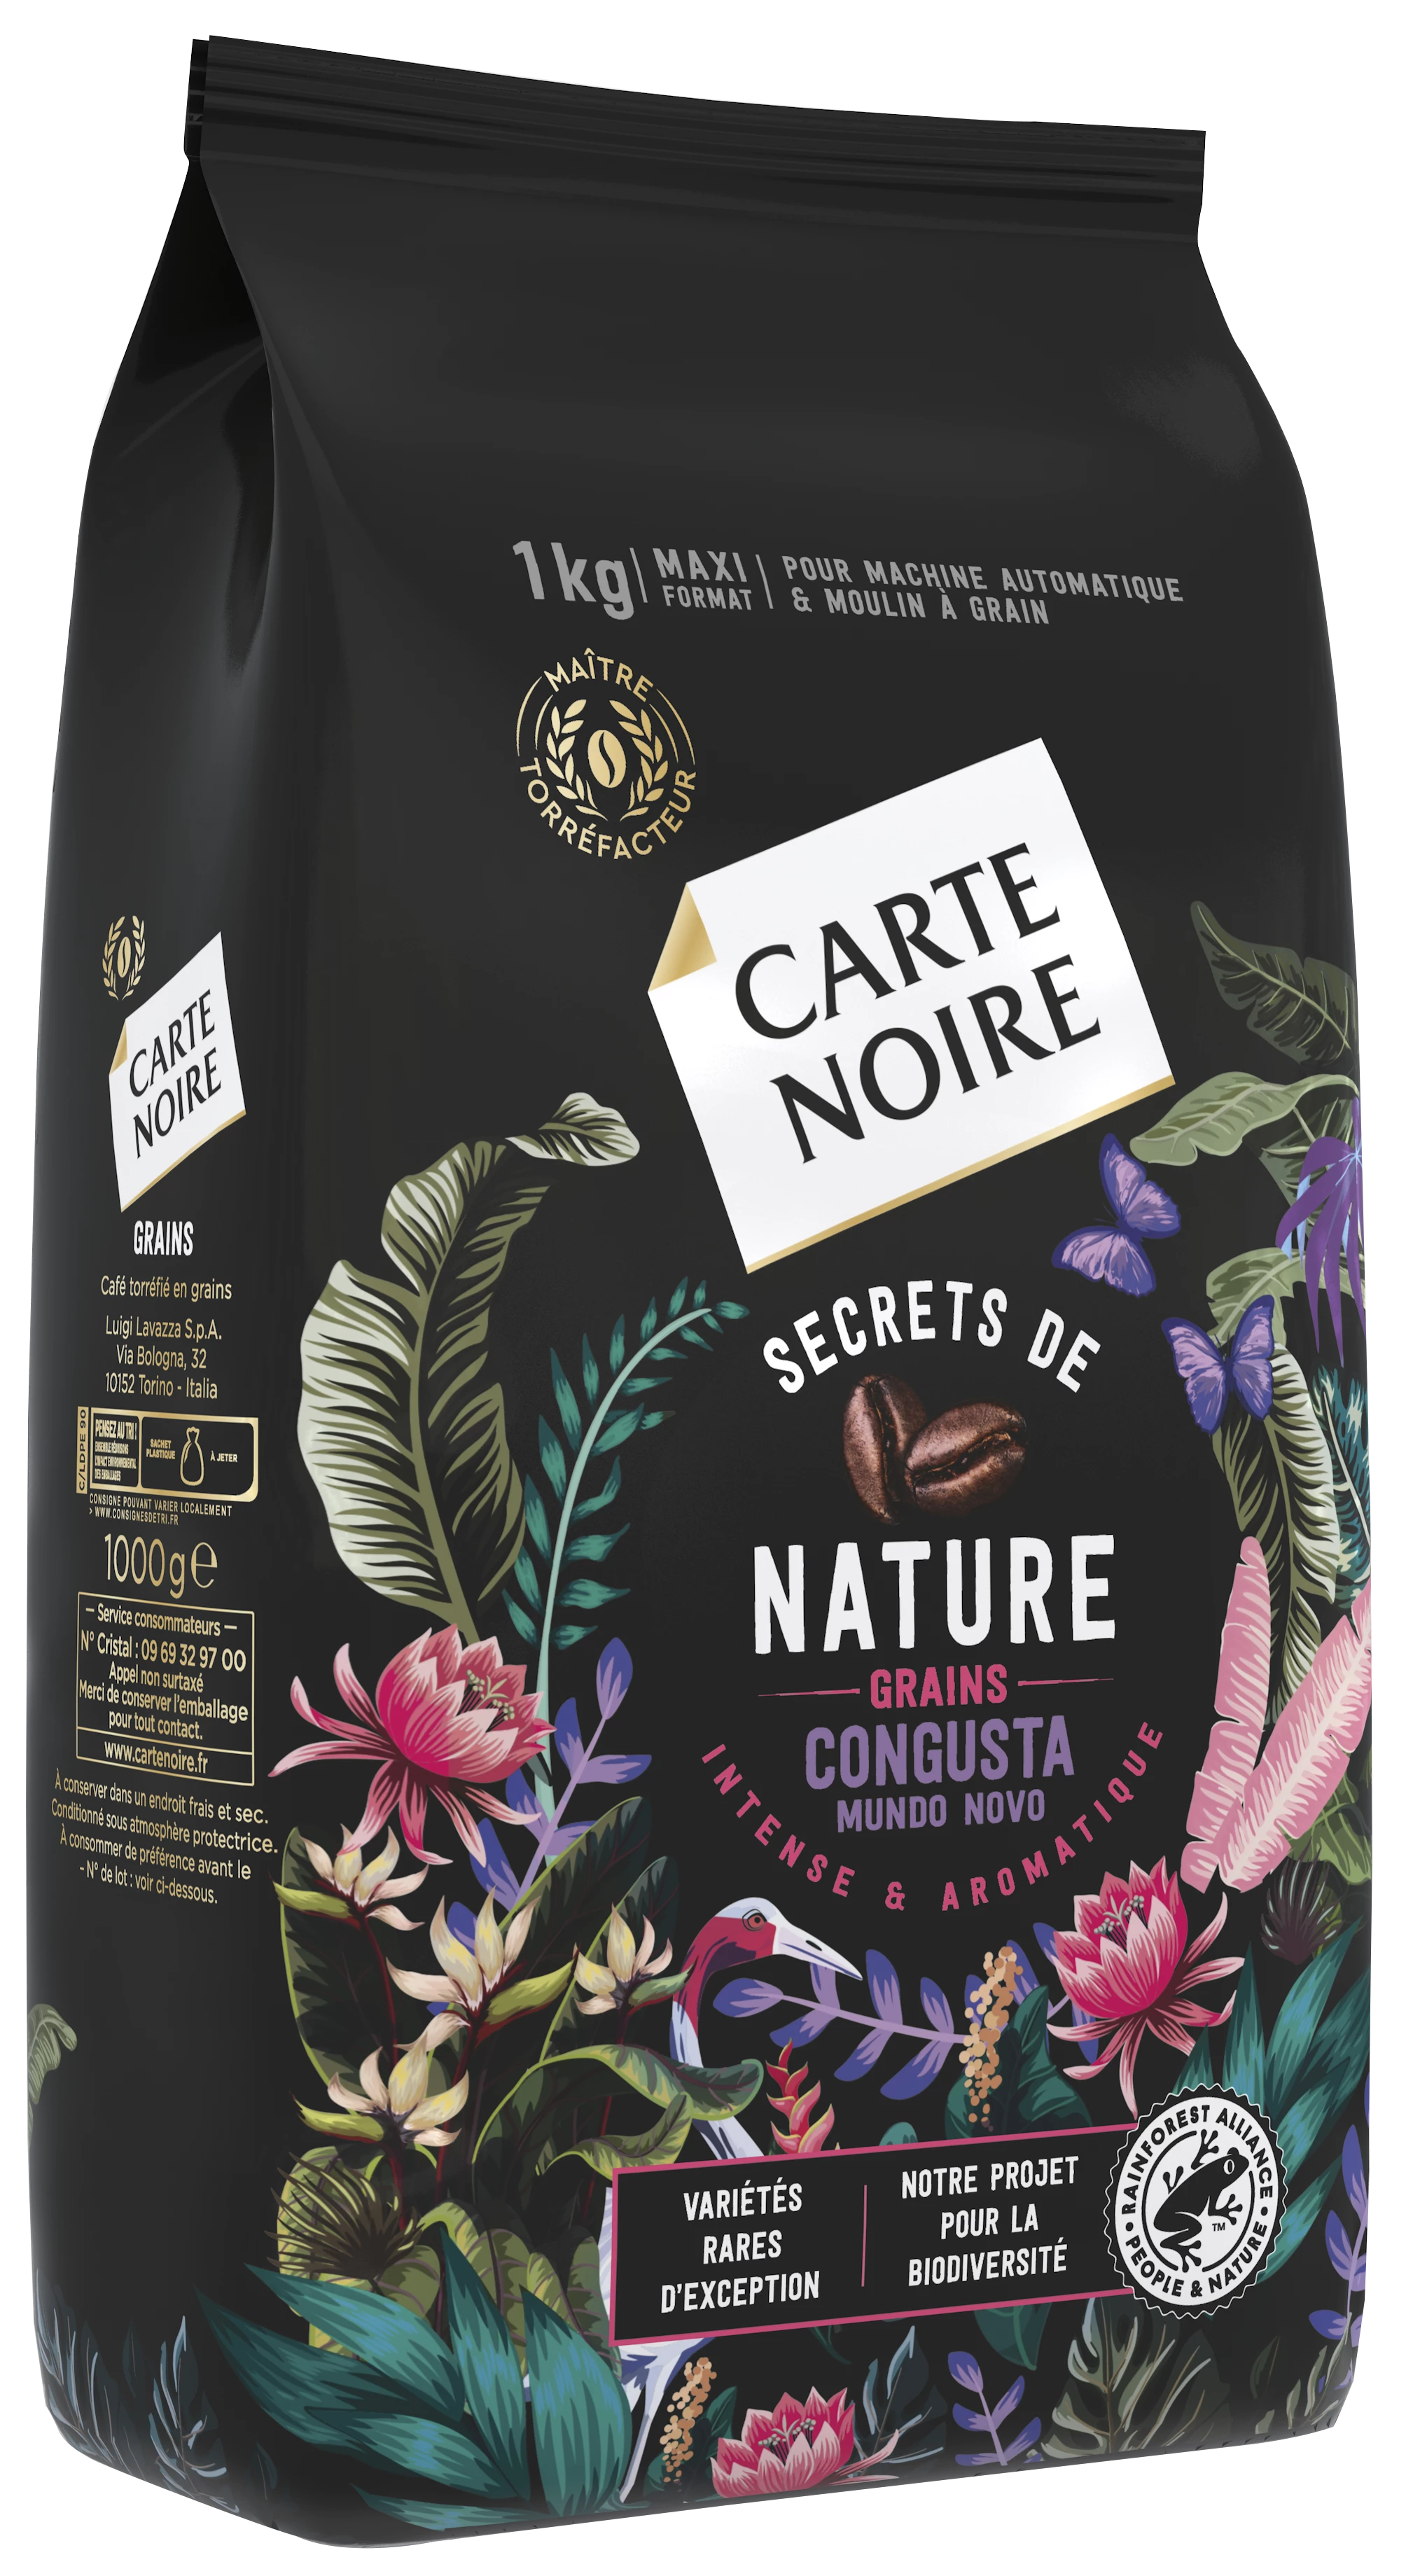 Congusta Intense & Aromatische koffiebonen; Zak van 1 kg - CARTE NOIRE